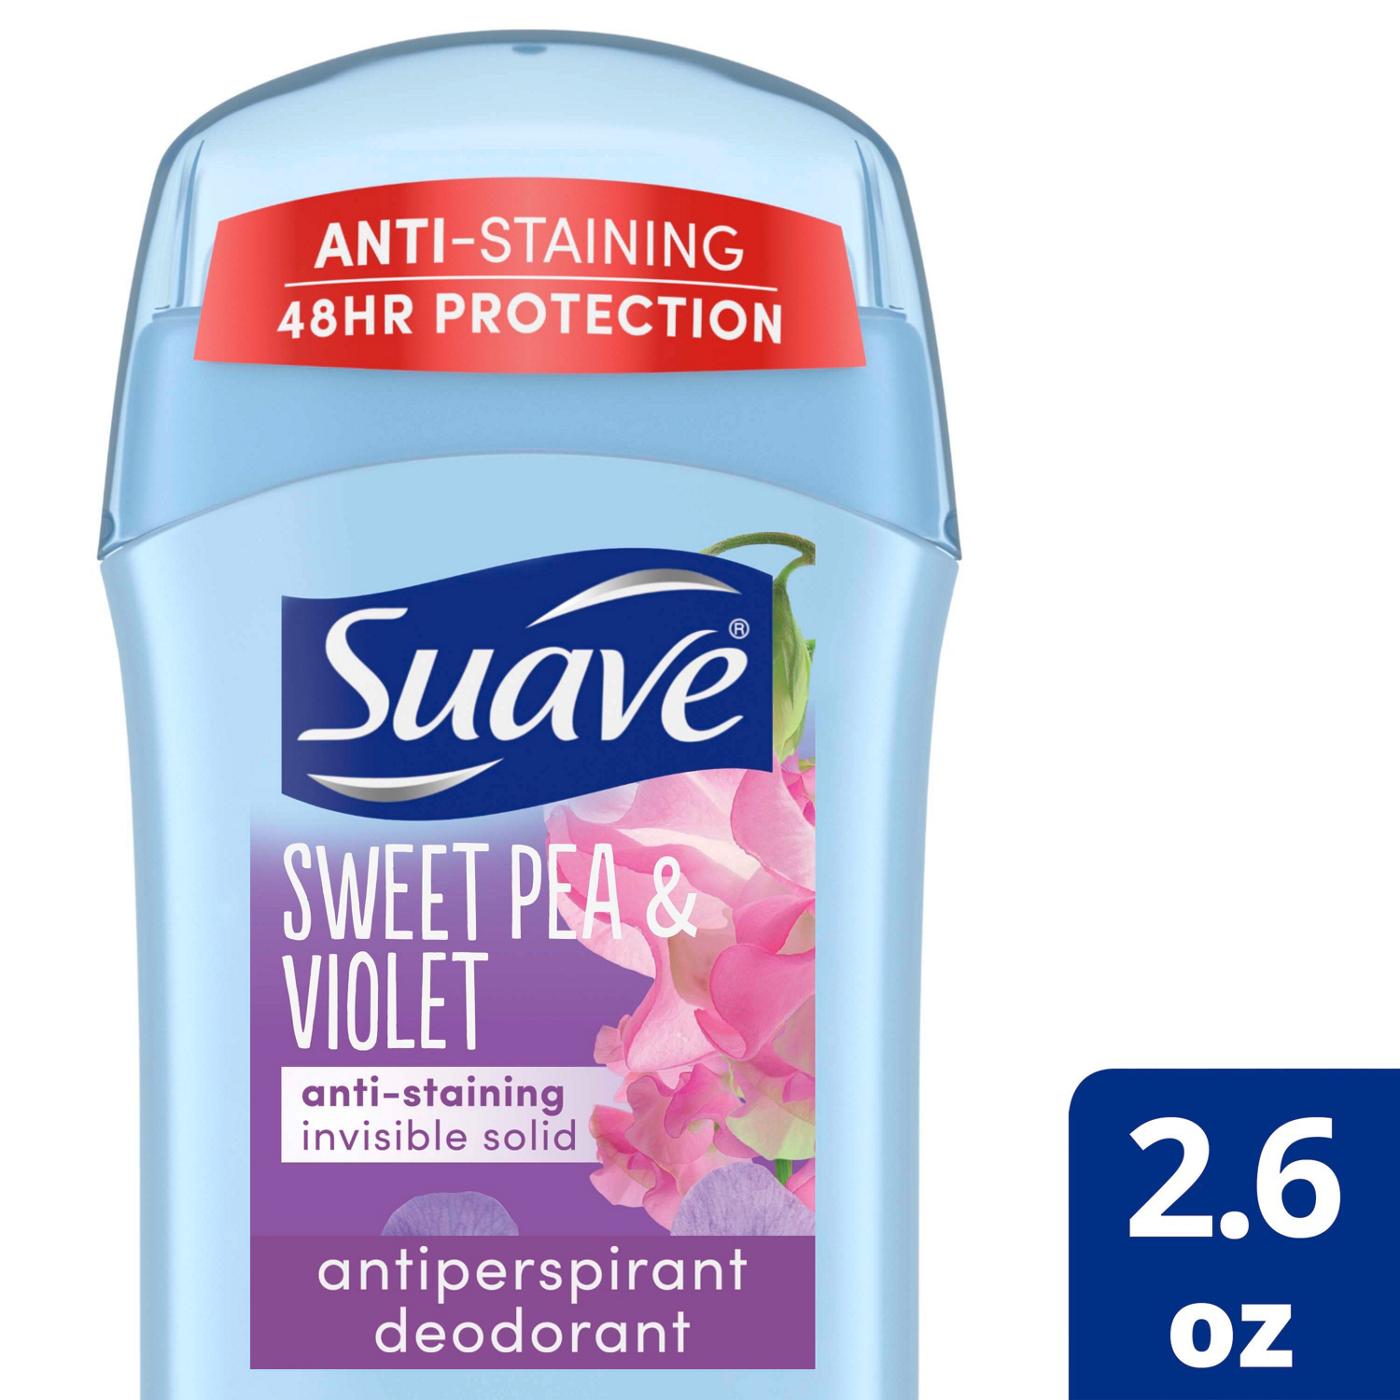 Suave Deodorant Sweet Pea and Violet Antiperspirant Deodorant Stick; image 2 of 3